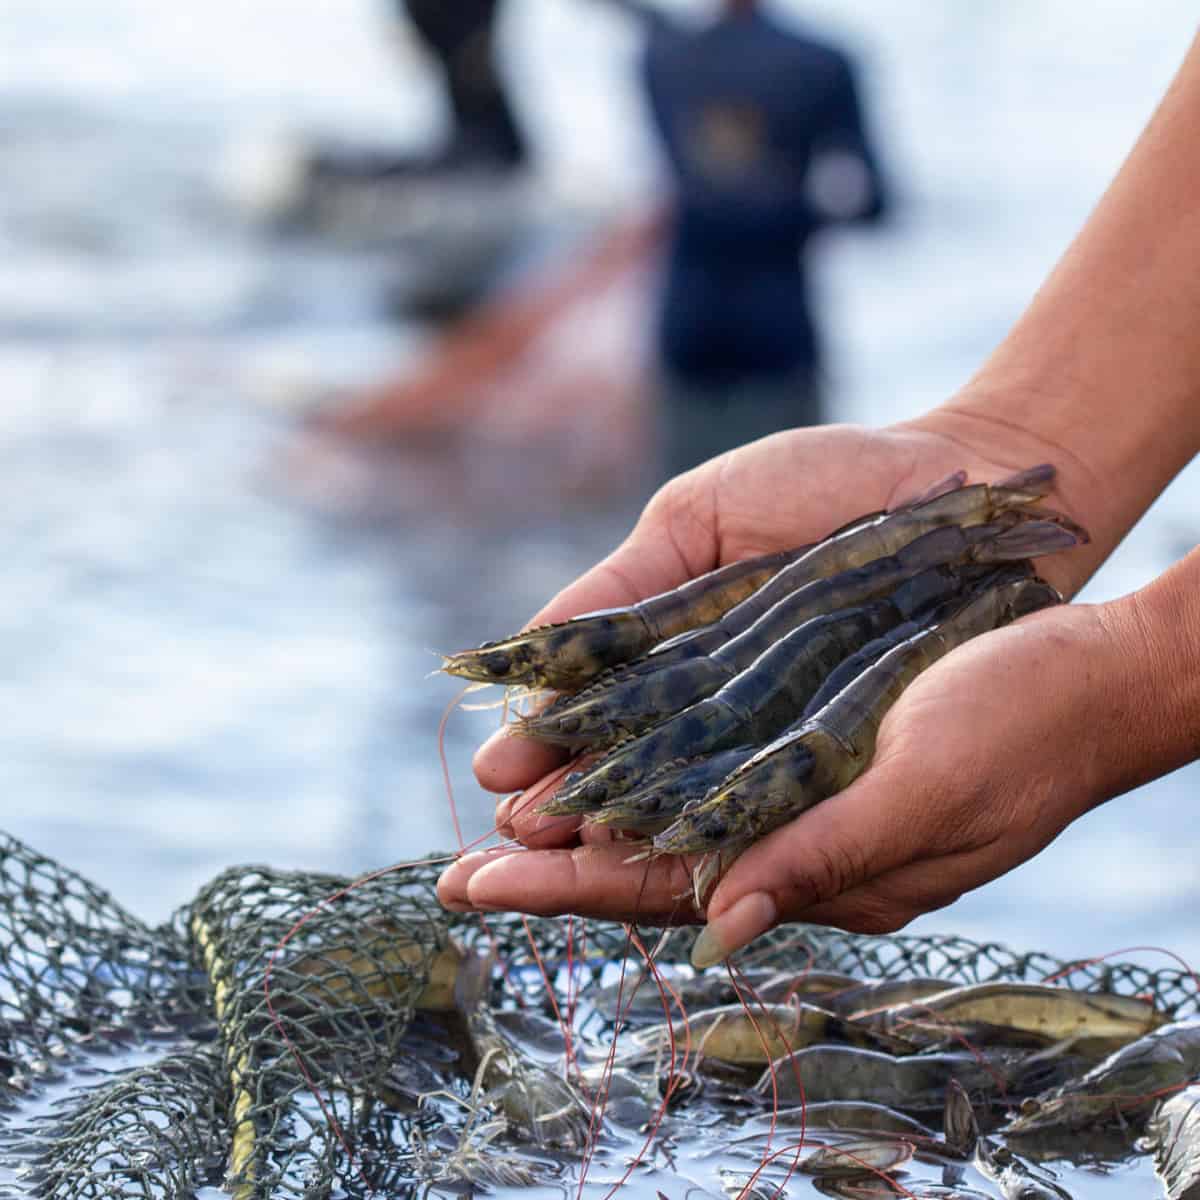 fresh caught head on shrimp held in hands of fisherman